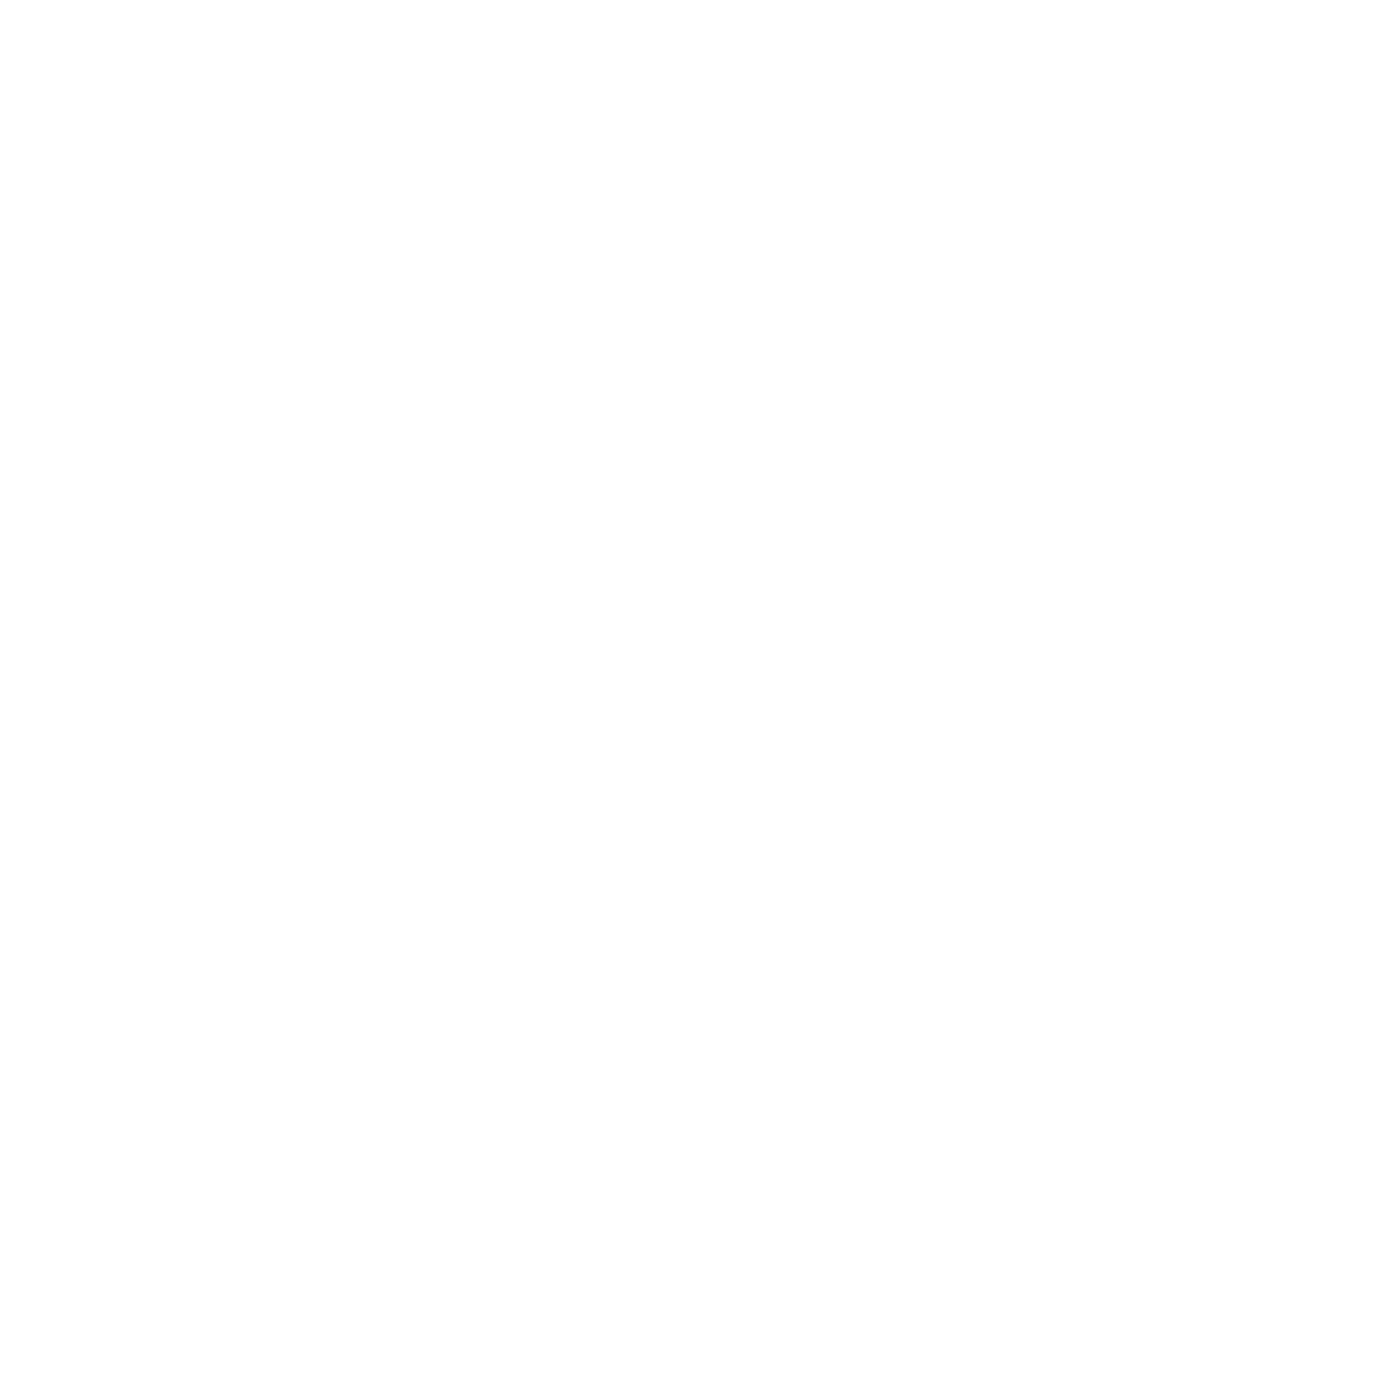 Women's Worldwide Car of the Year